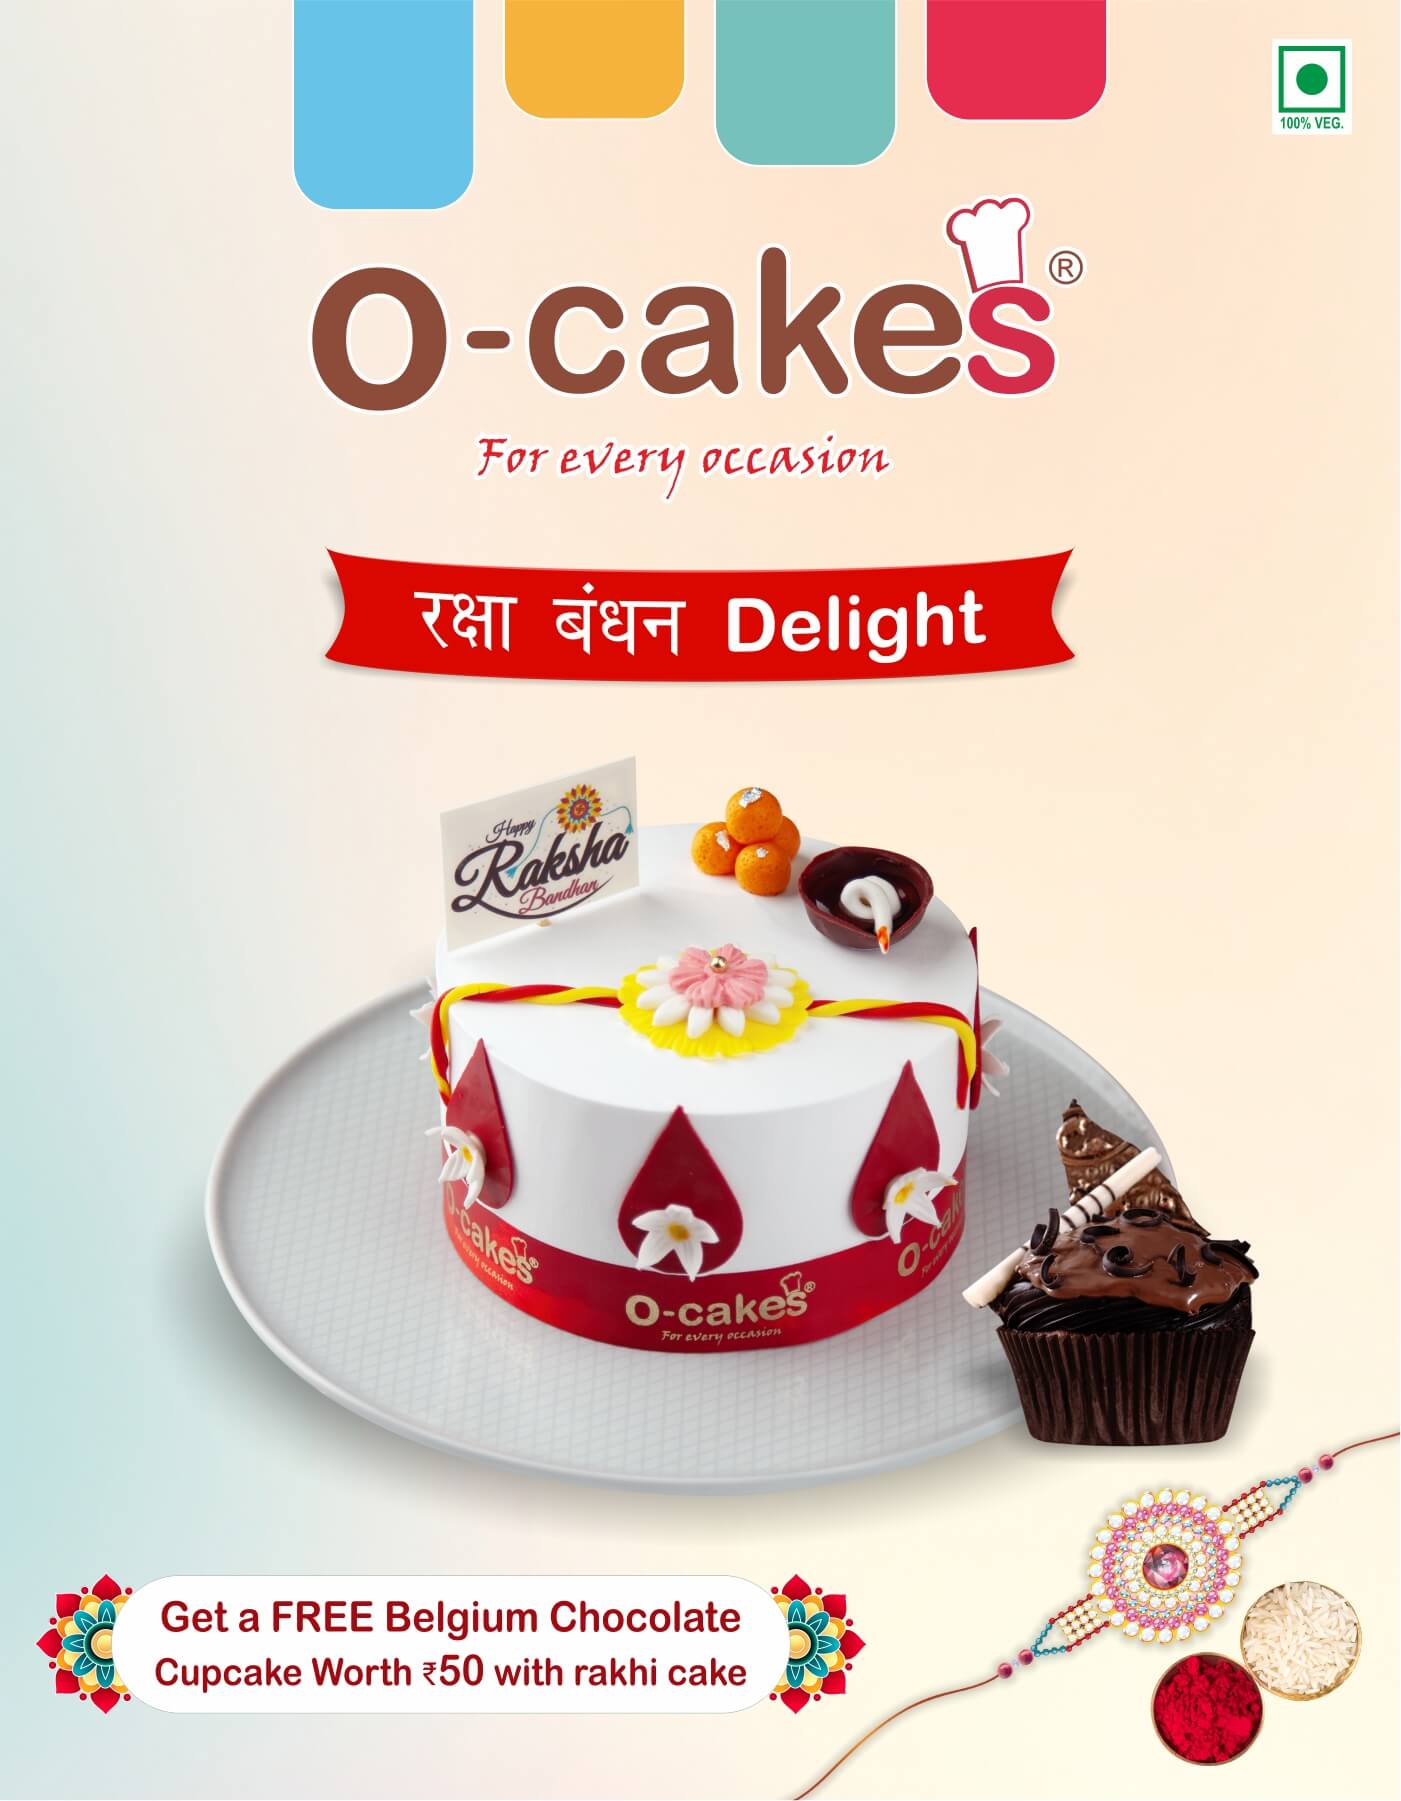 Krishtina Foods Pvt Ltd (O-cakes) | LinkedIn